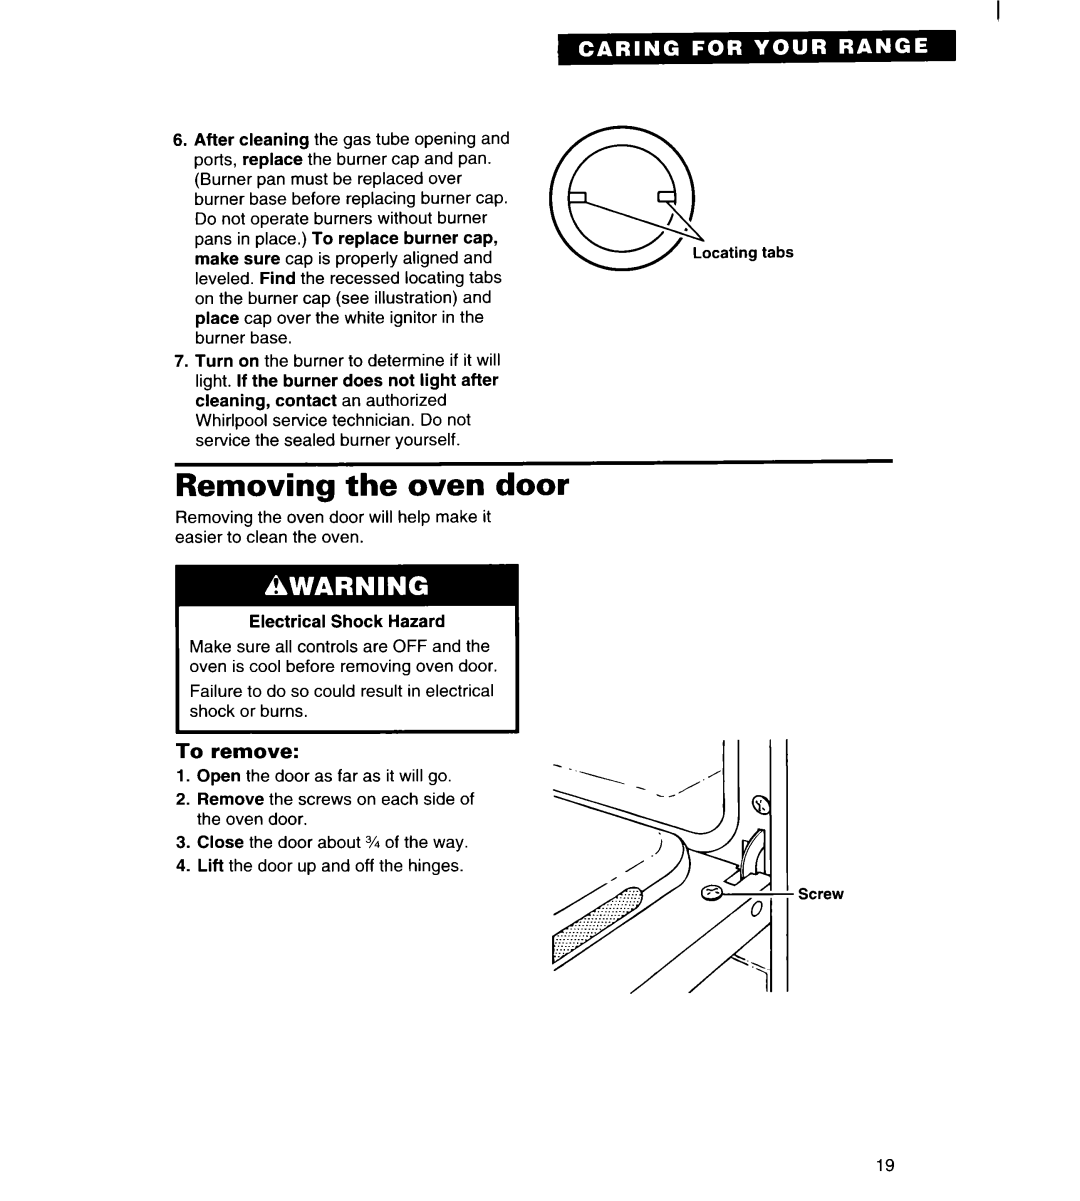 Estate TGRGIWZB manual Removina the oven door, ‘1 - ,..’ jQj A/.‘ .%’/ Screw 